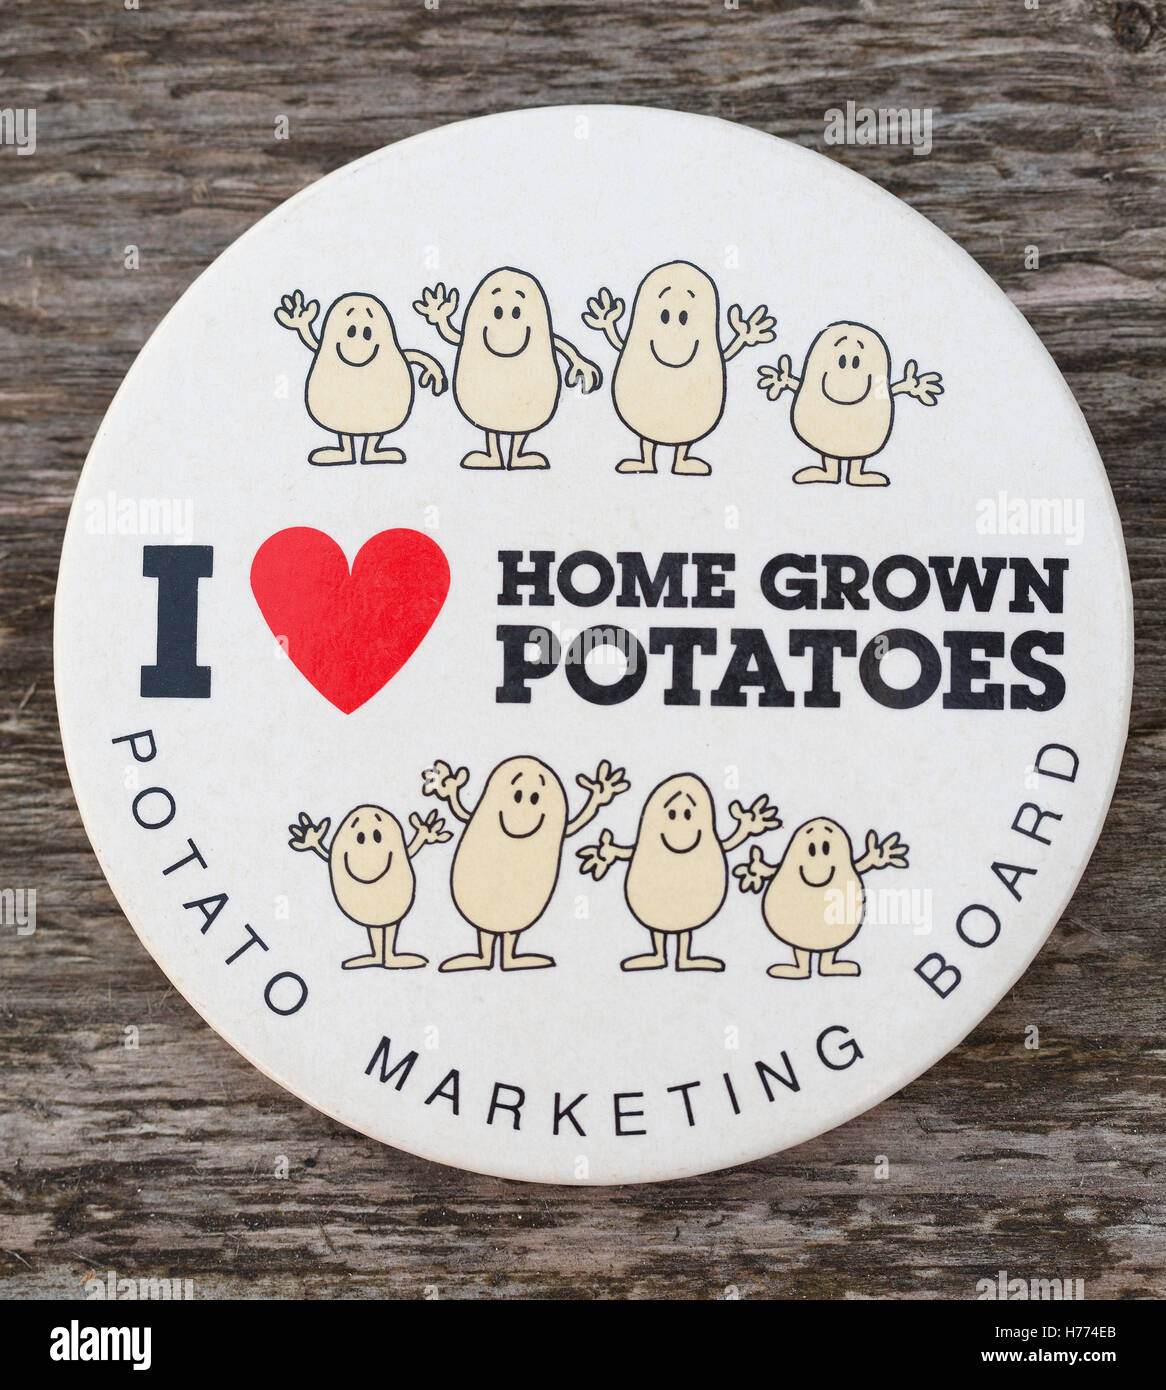 I Love Home Grown Potatoes Badge - Potato Marketing Board Advertising Stock Photo